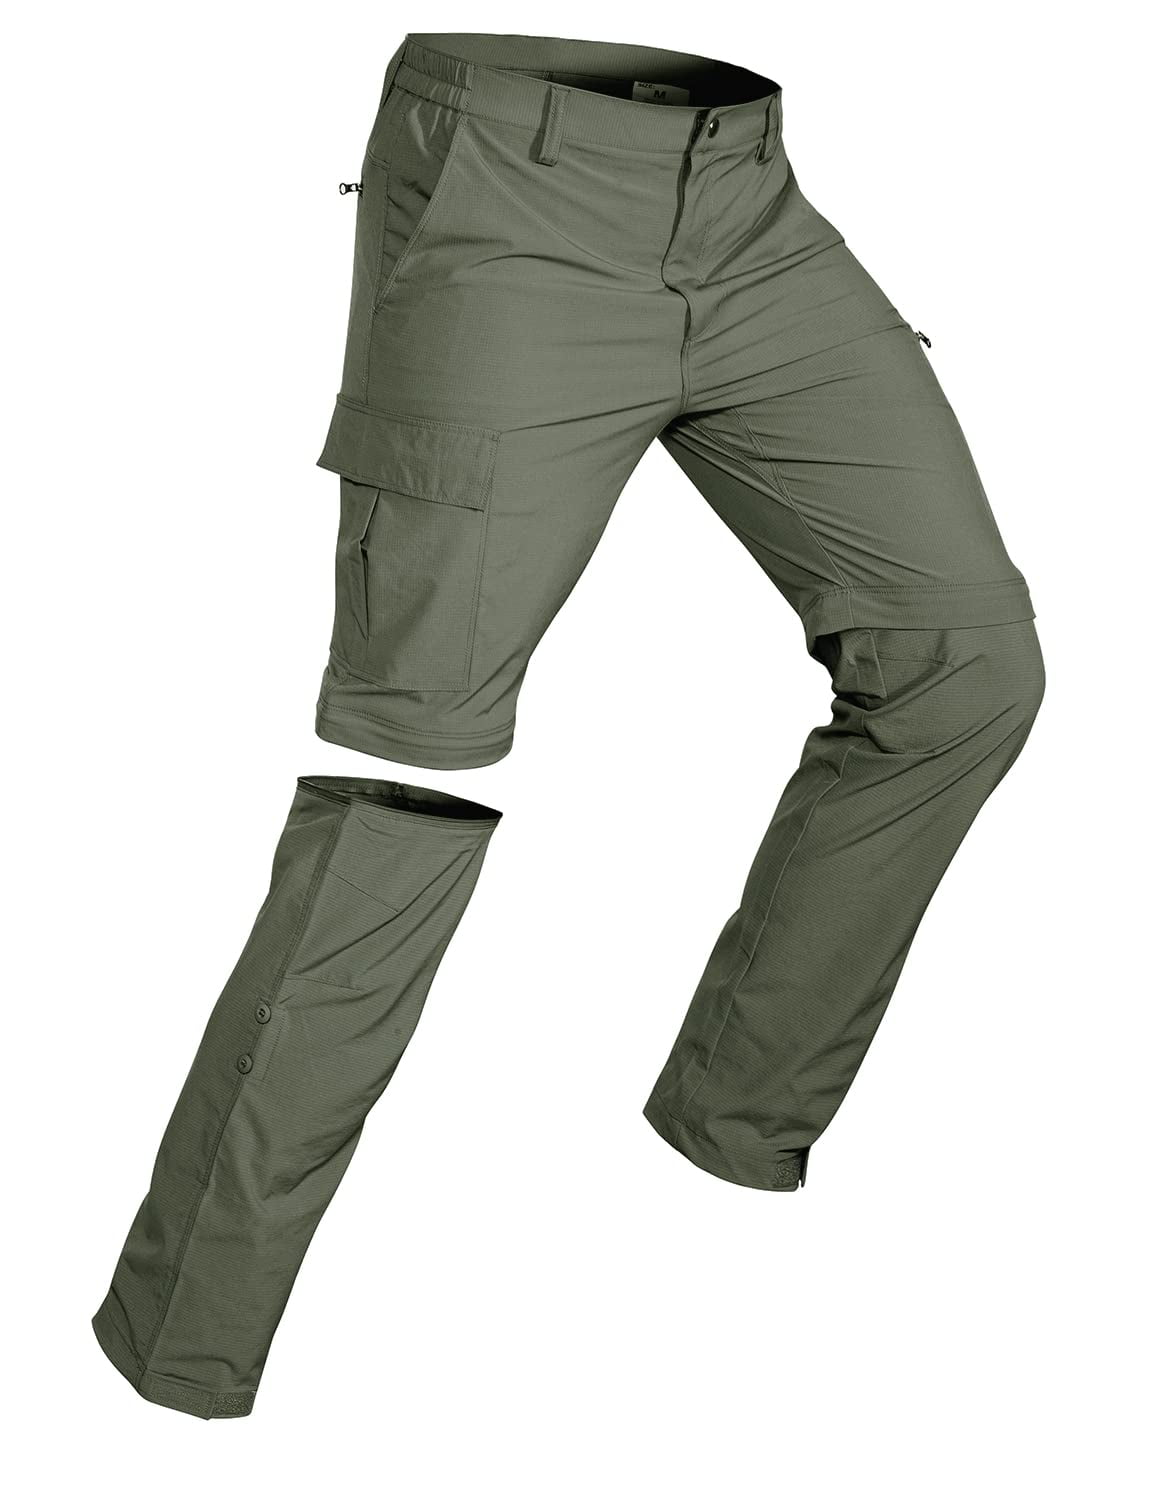 Hiauspor Men's Convertible Hiking Pants Outdoor Quick Dry Zip Off Pants  Grey Sizes S-3XL